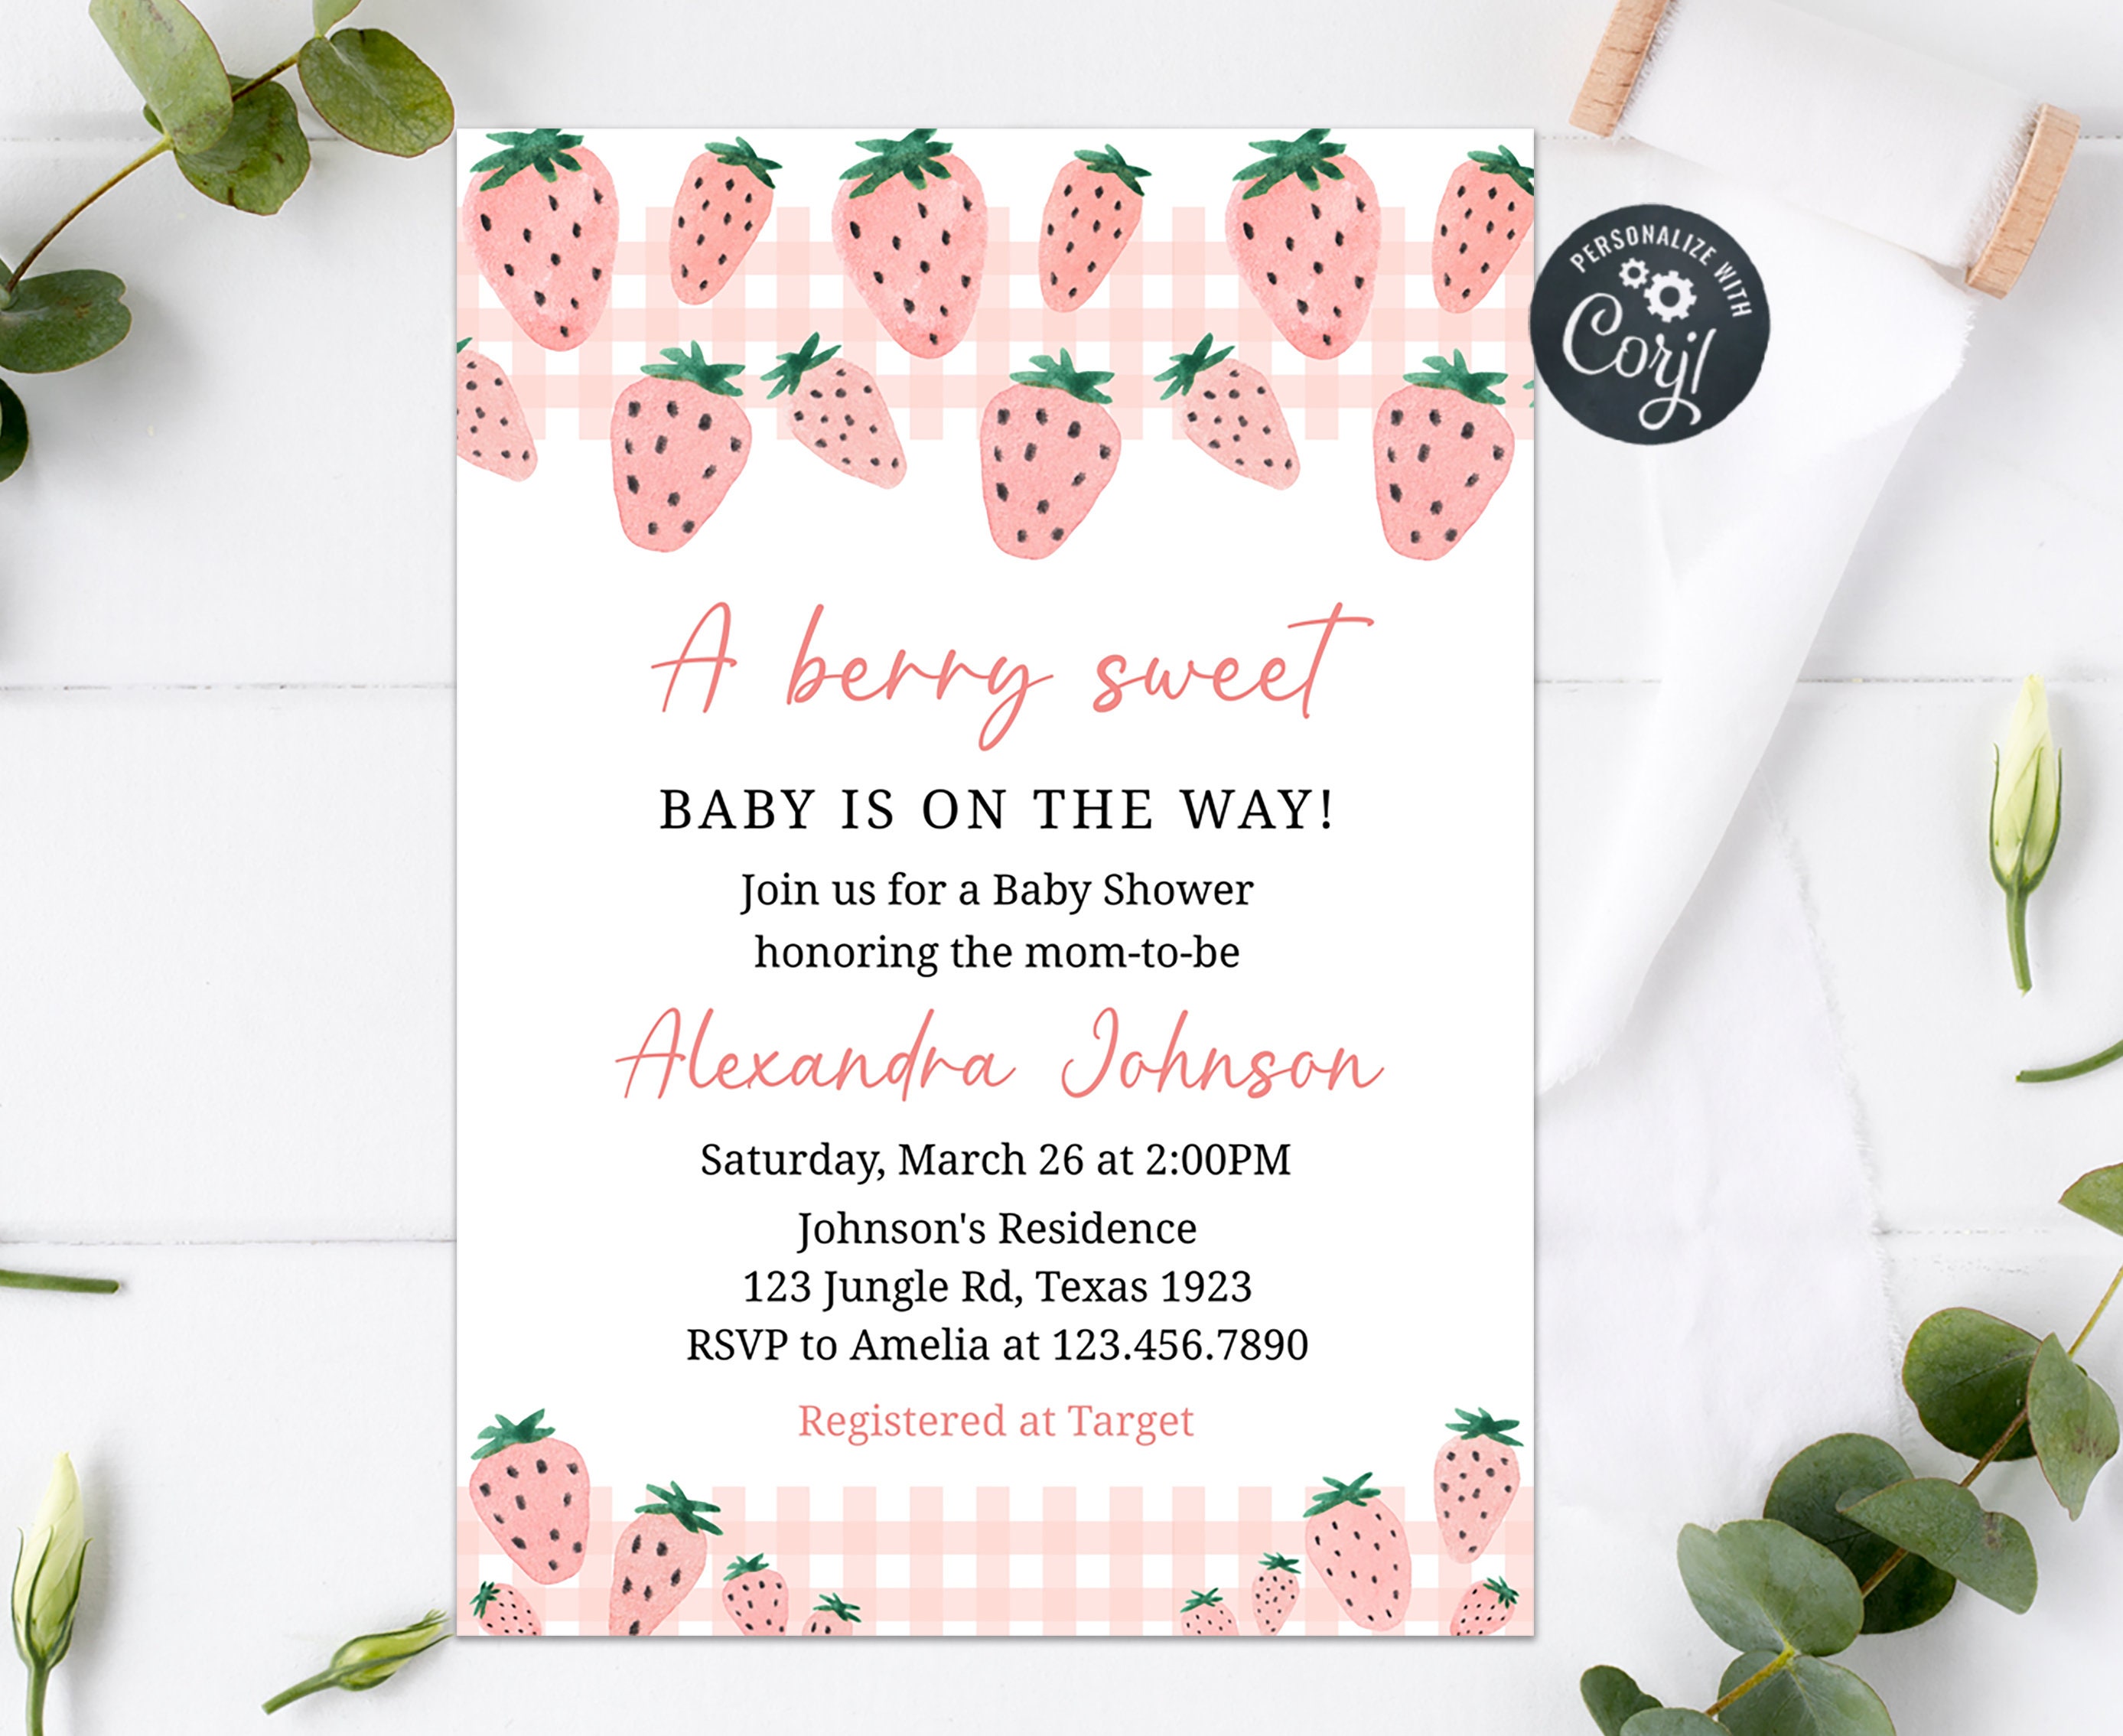 Editable Strawberry Baby Shower Invitation Berry Sweet Baby 